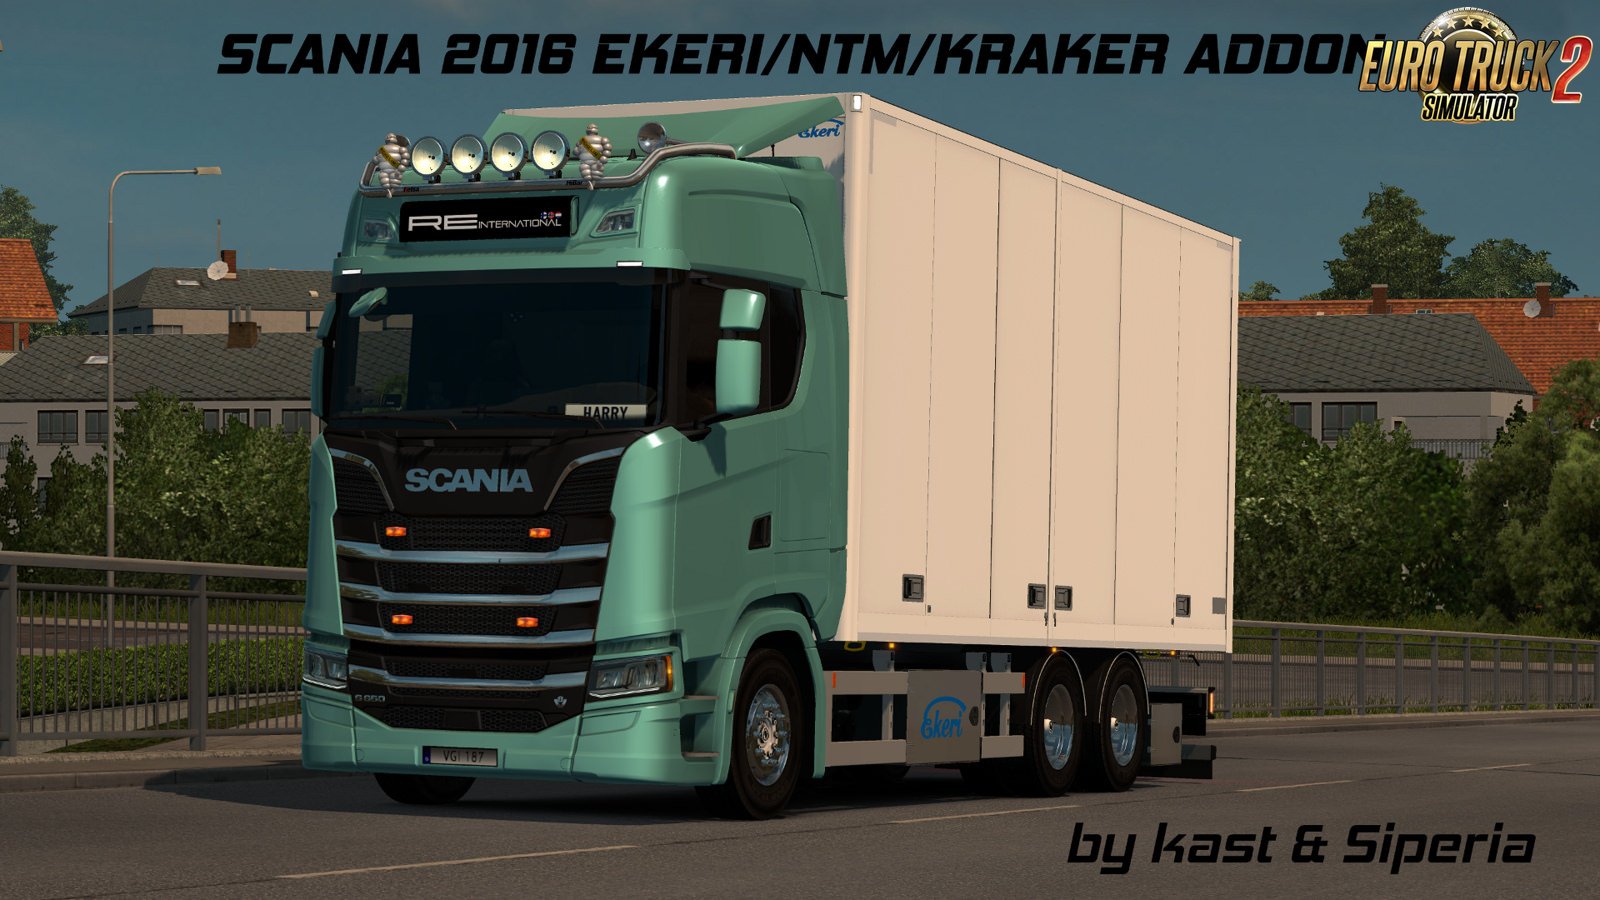 Kraker/NTM/Ekeri Tandem addon for Next Gen Scania by Siperia [1.33.x]